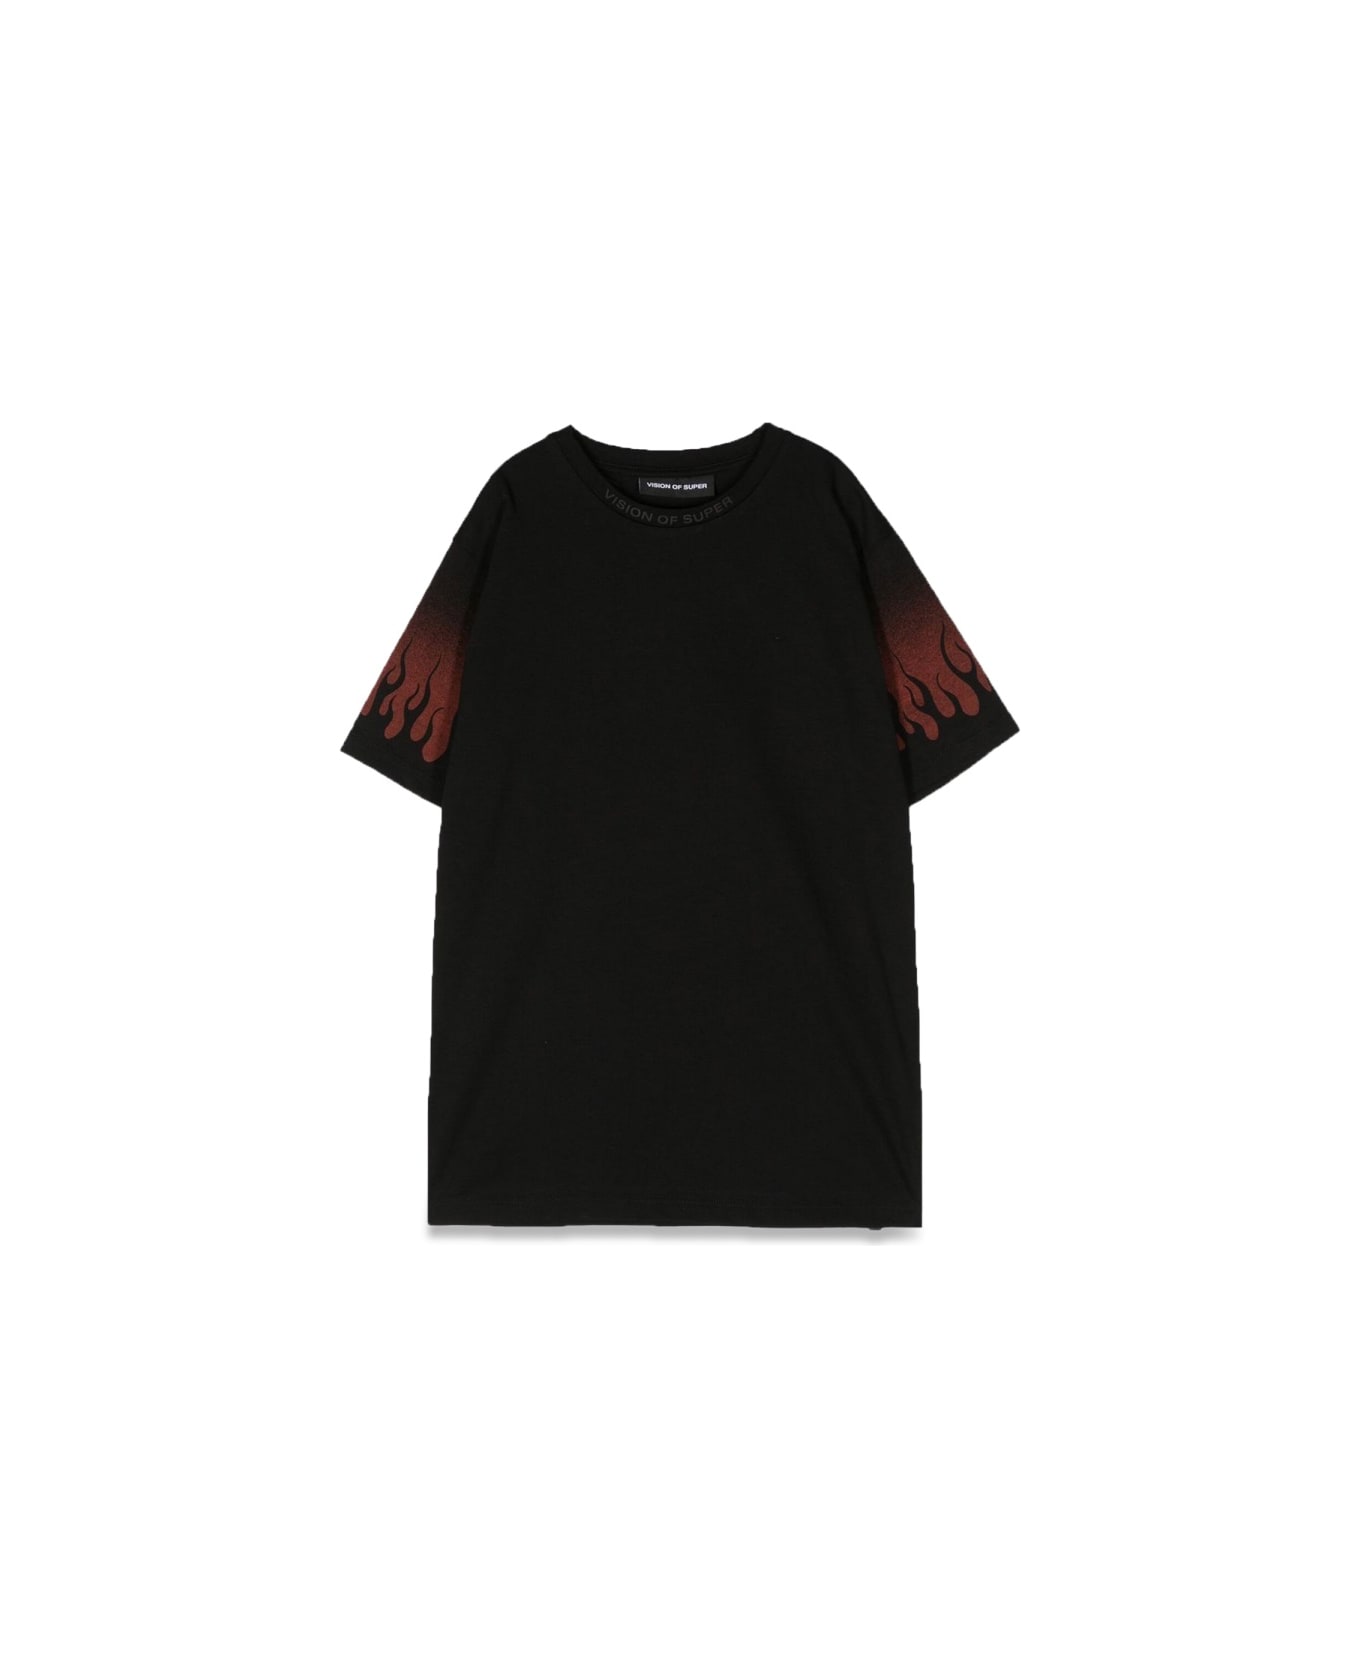 Vision of Super Negative Red Flames M/c T-shirt - BLACK